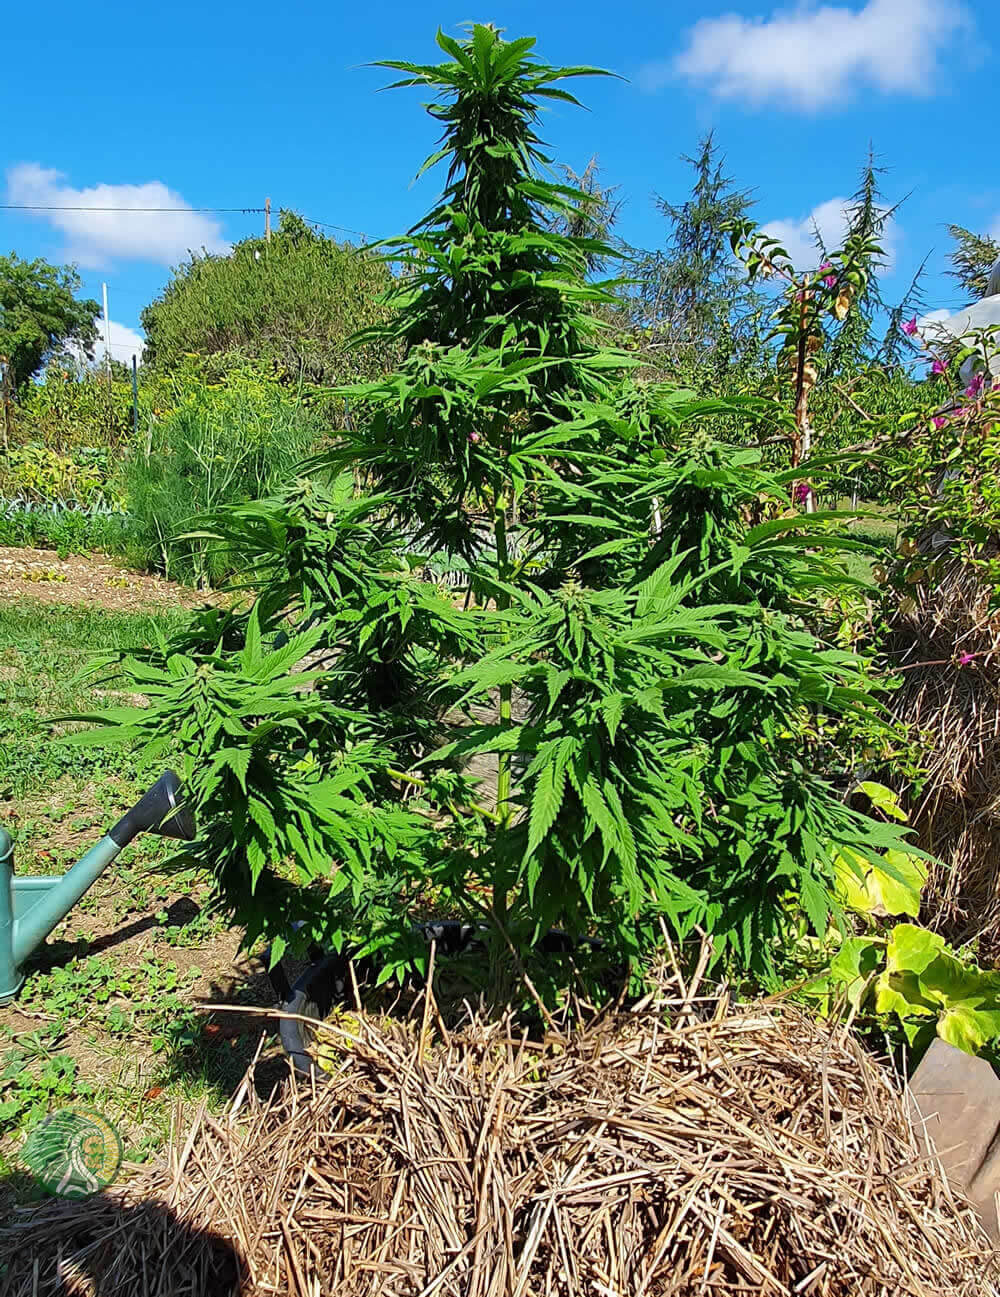 Matières organiques dans la culture du cannabis